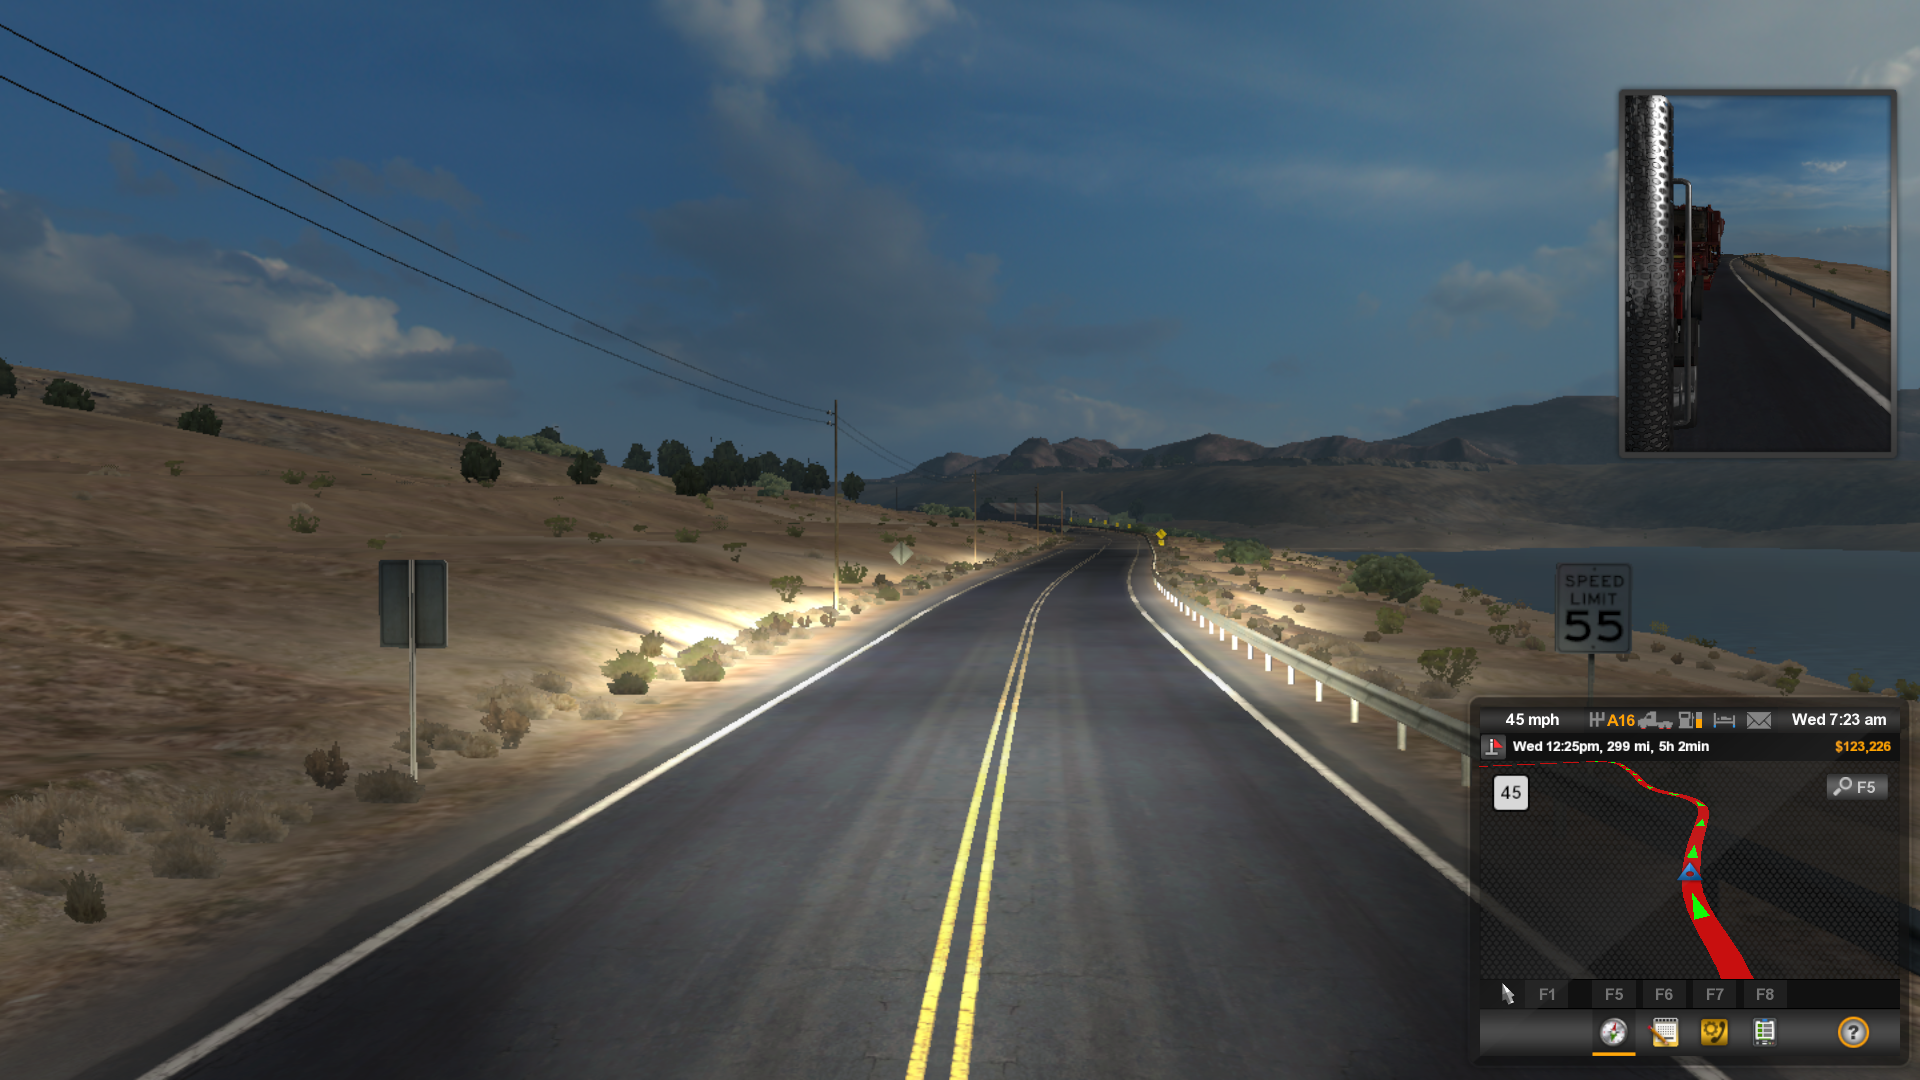 American Truck Simulator, PC Mac Linux